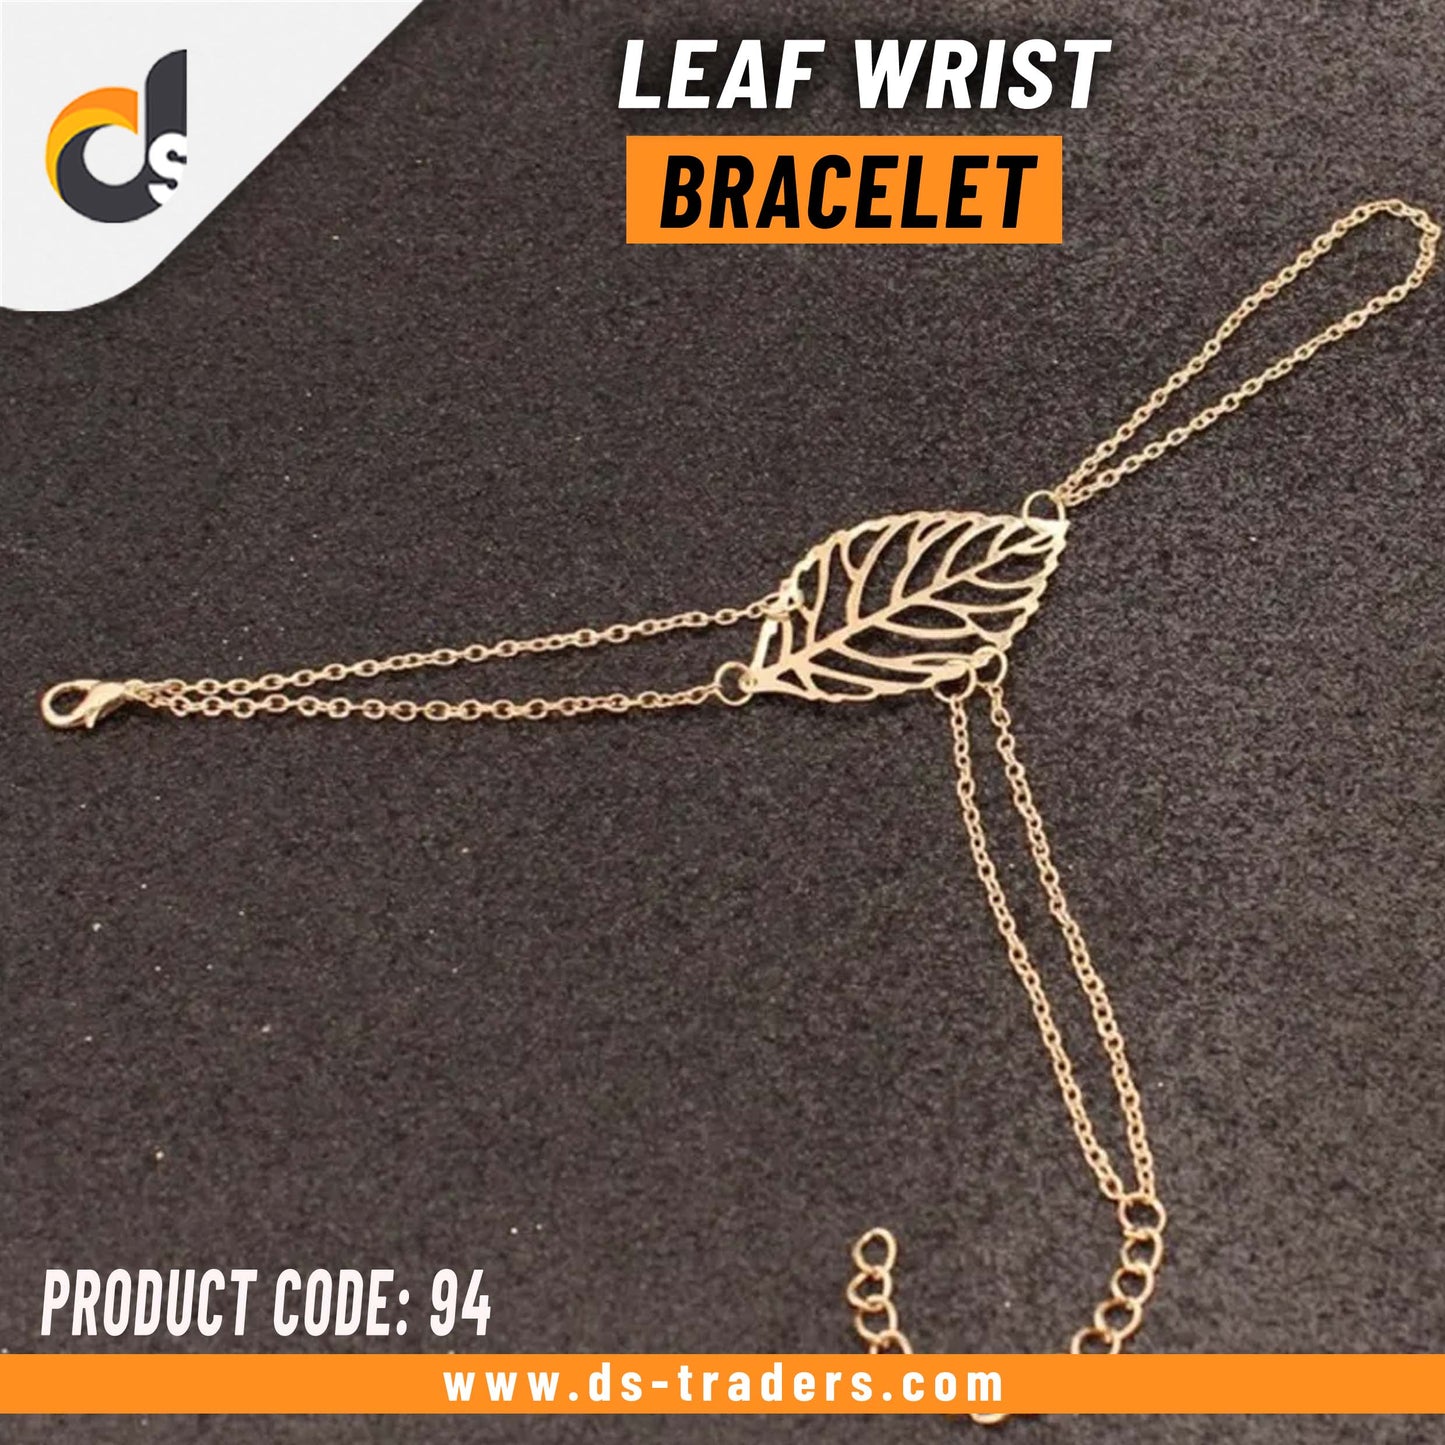 Leaf Wrist Bracelet